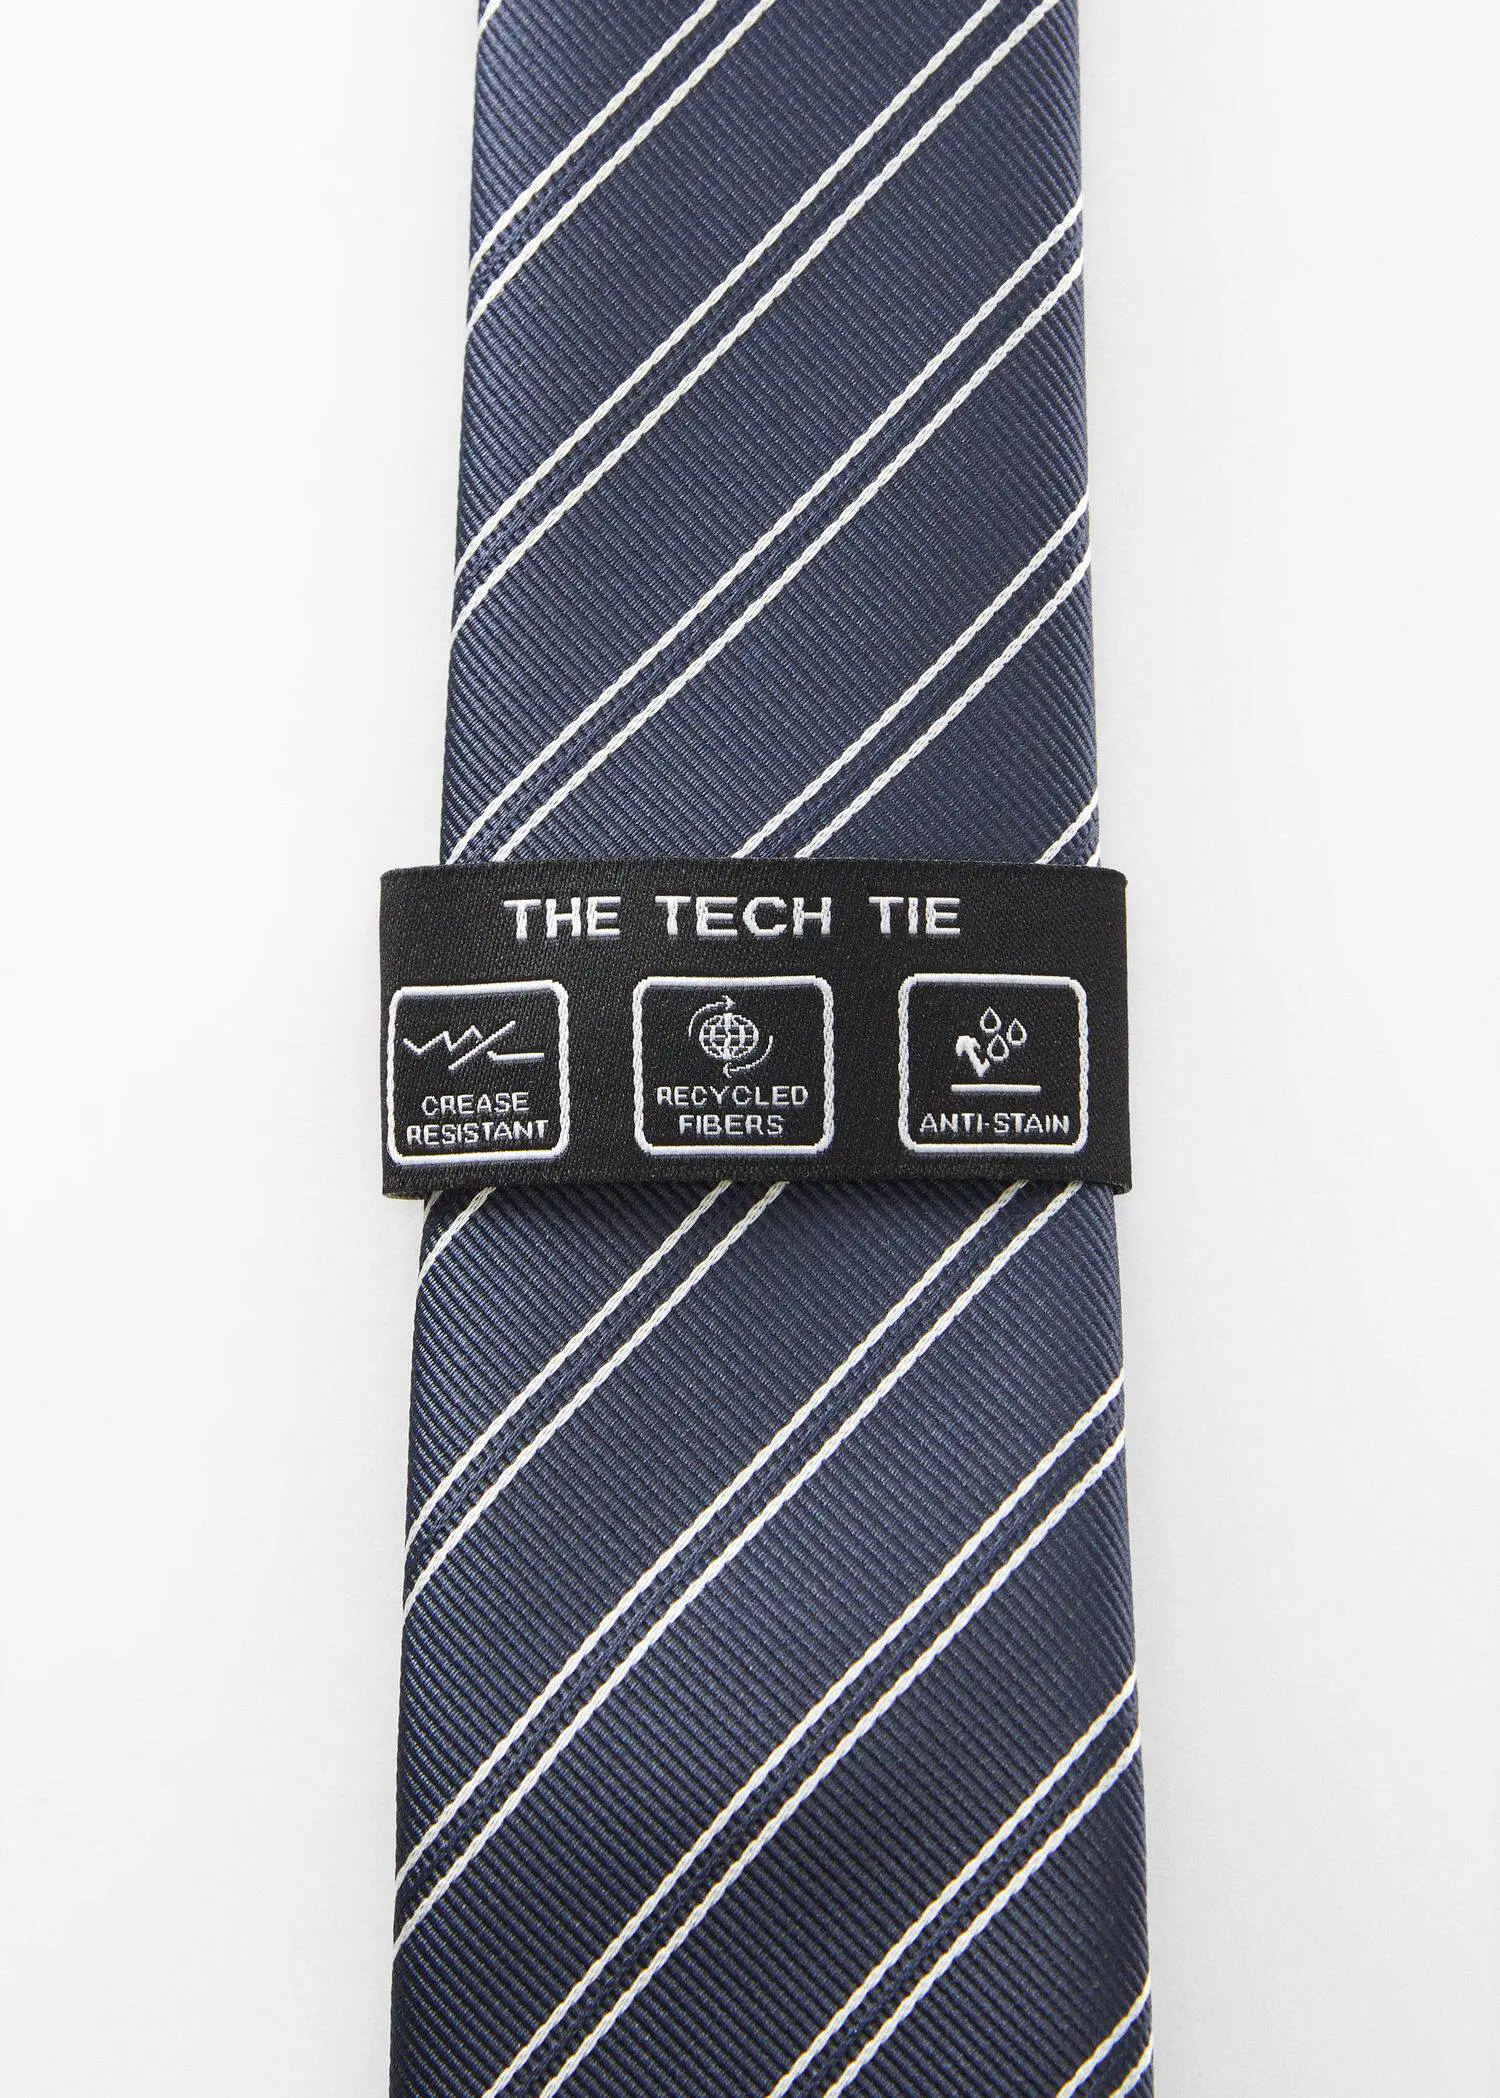 Mango Stain-resistant striped tie. 2